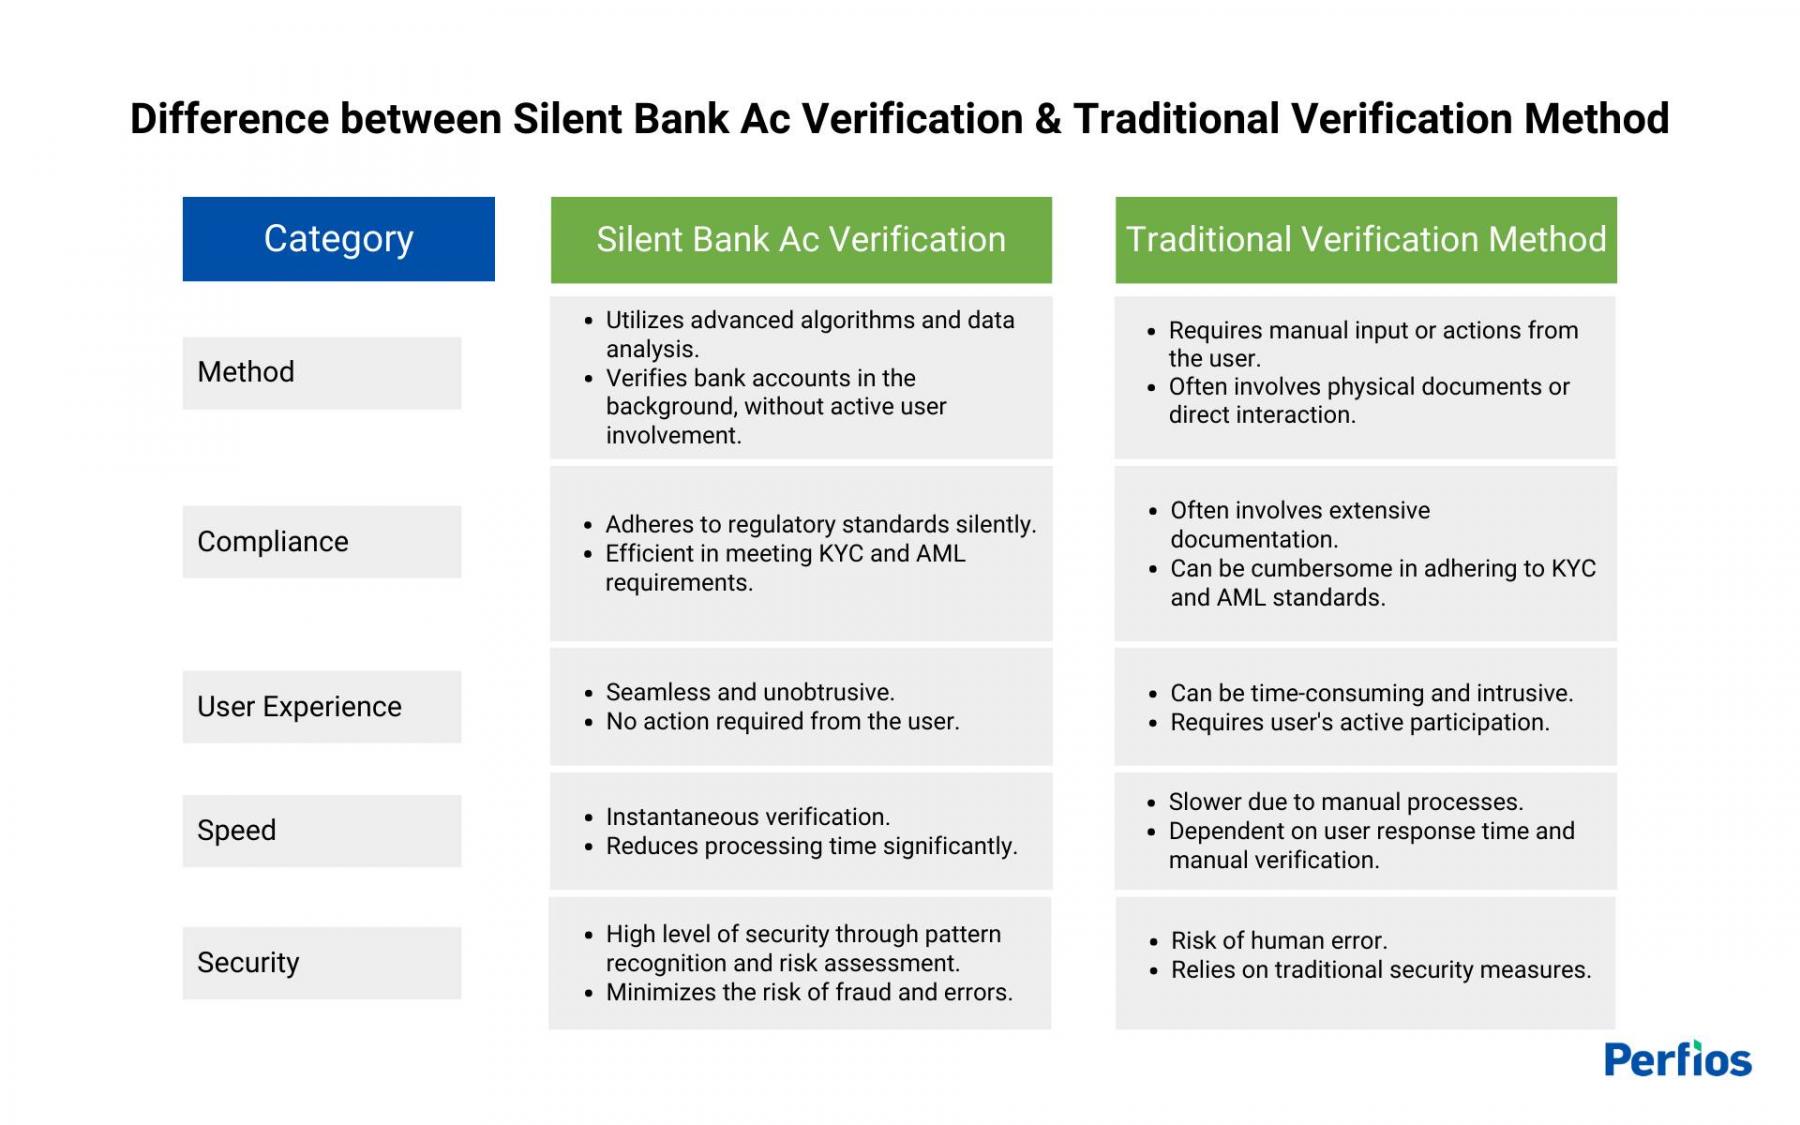 Silent Bank Account Verification